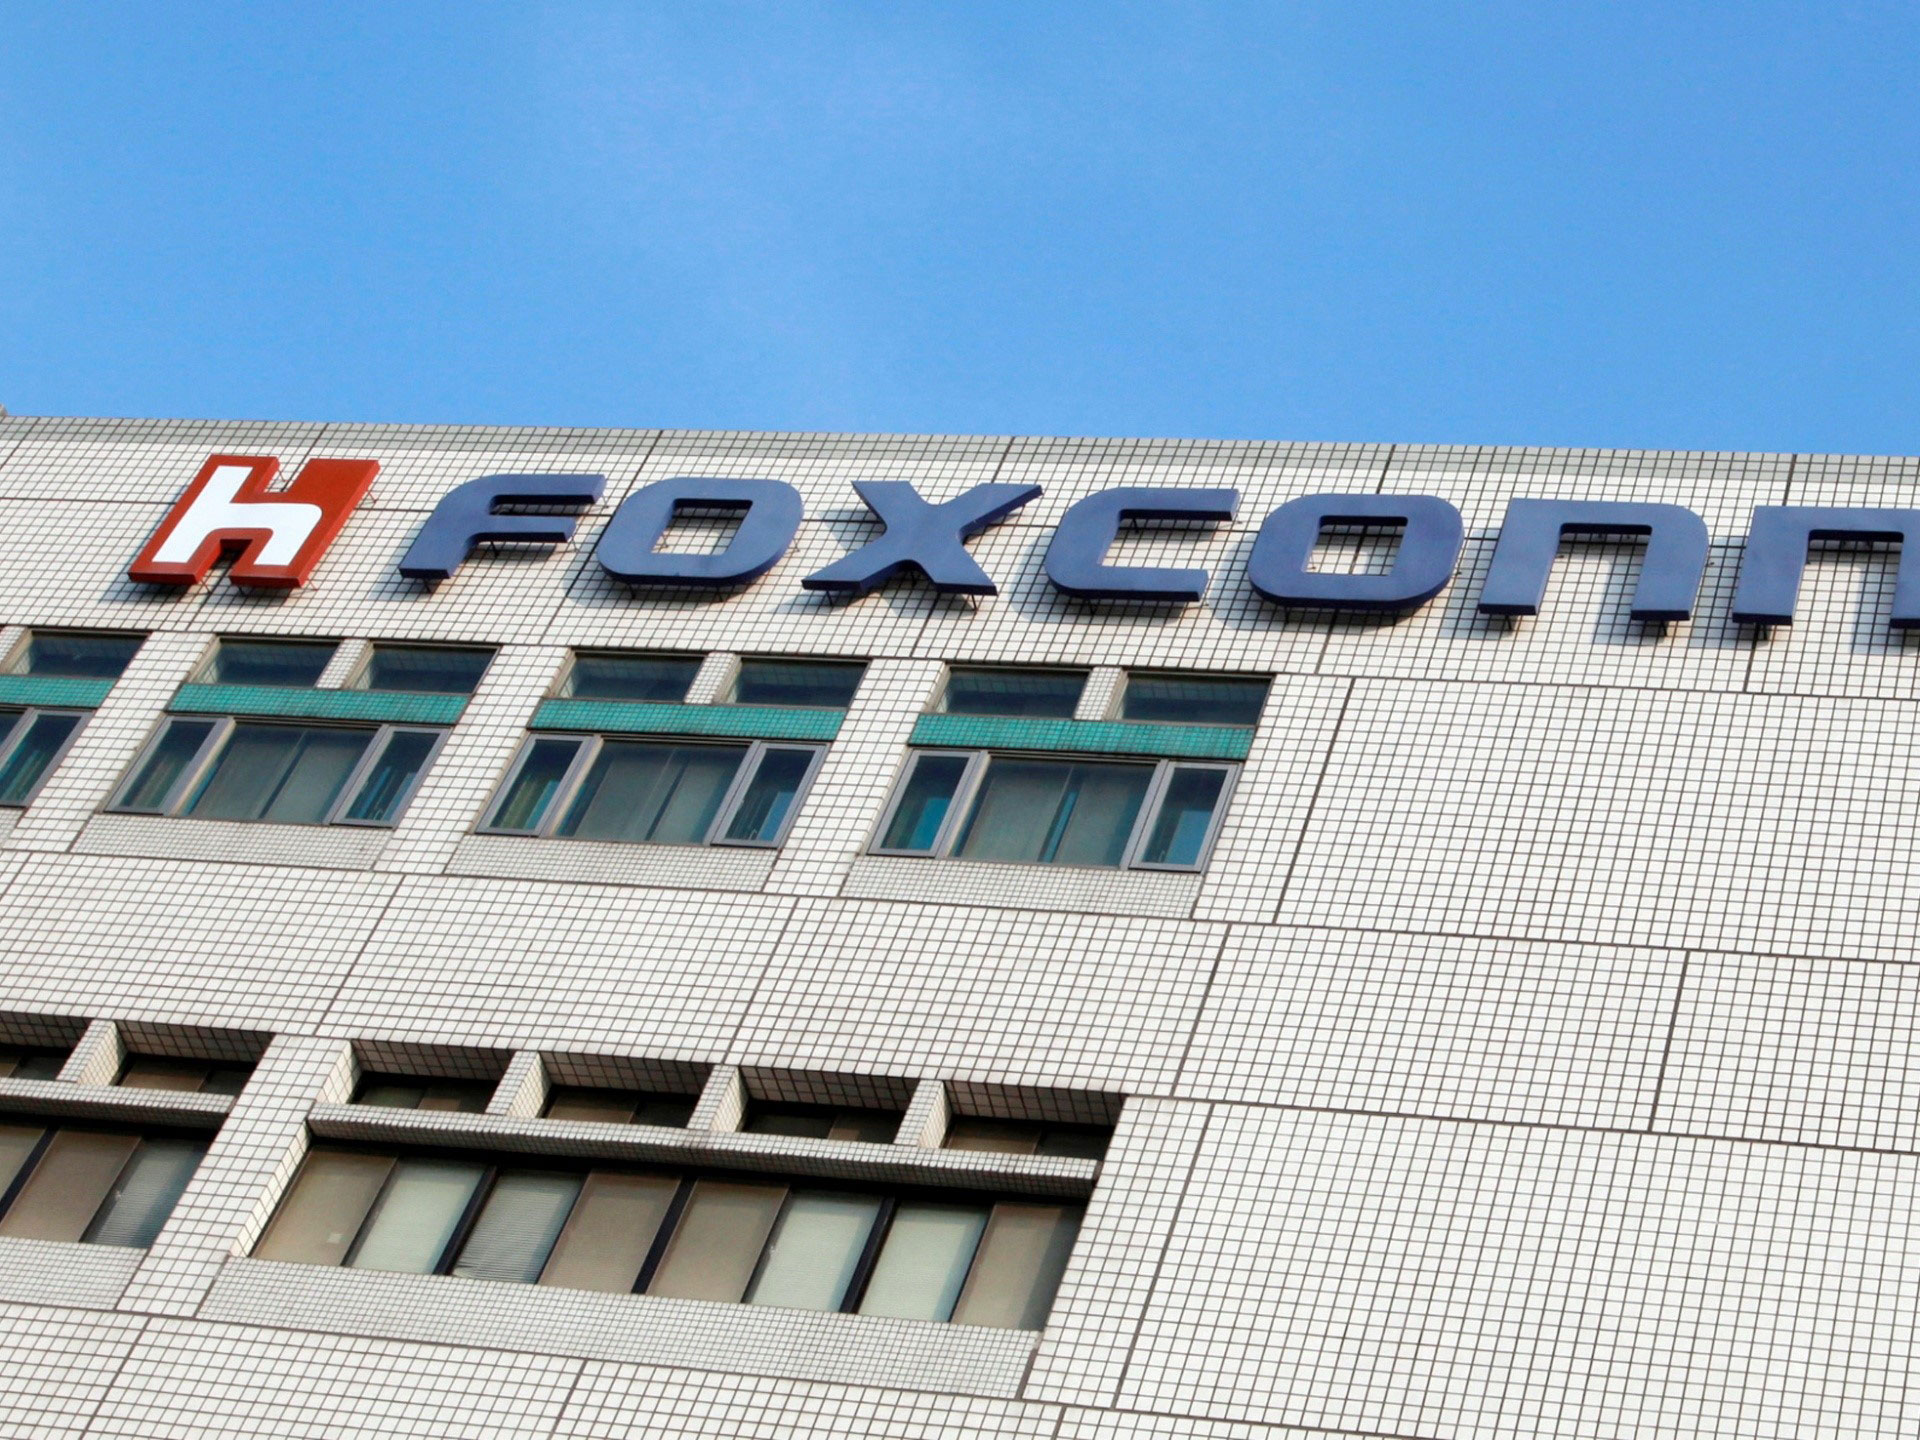 С завода Foxconn, производящего iPhone, уволилось 20 000 сотрудников